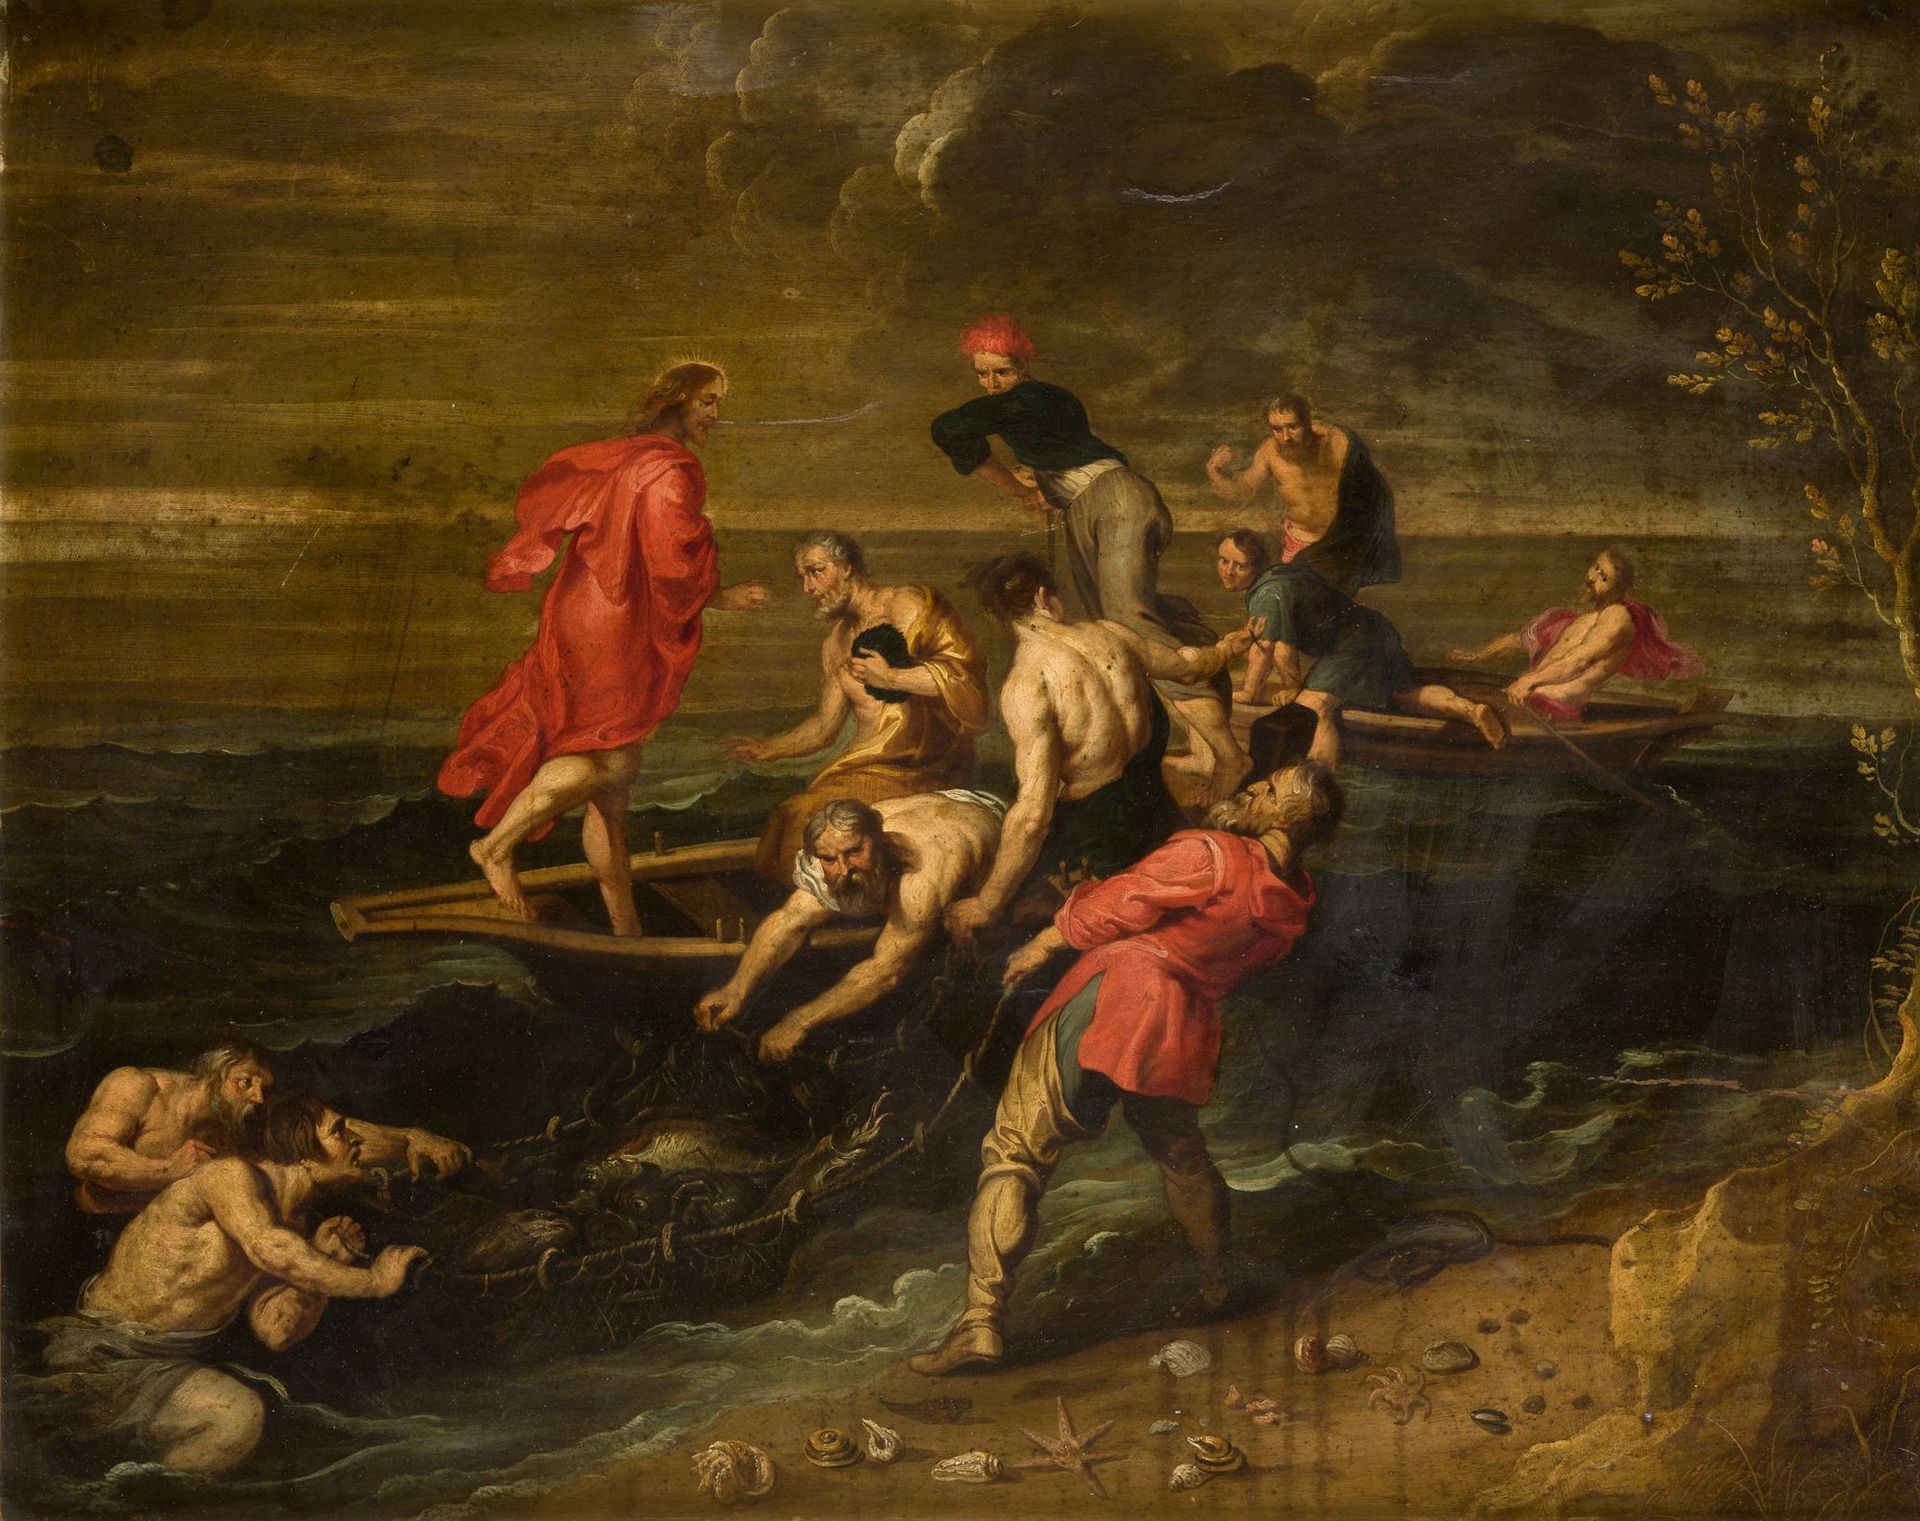 CIRCULO DE RUBENS (C. 17th / ?) "The miraculous catch" 铜上油彩。68 x 85厘米